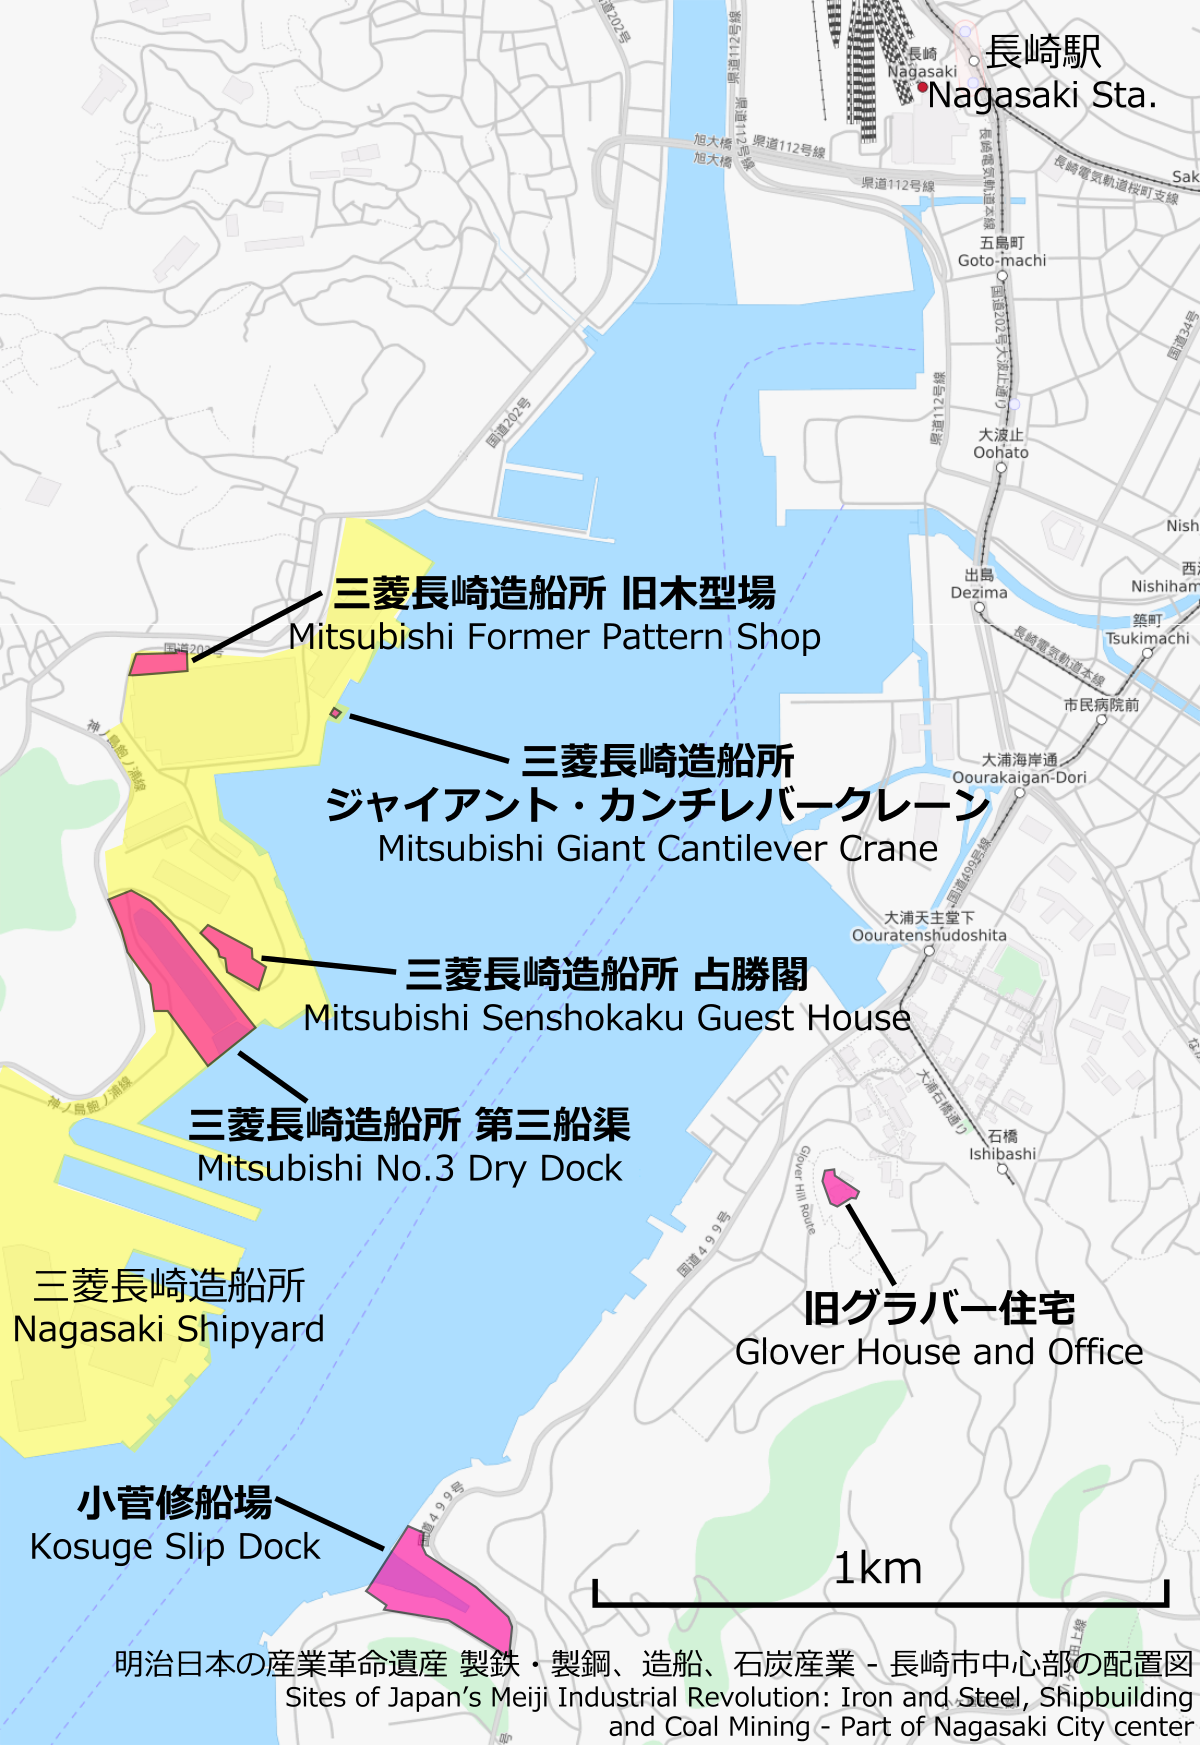 Japan’s Meiji Industrial Revolution sites map Nagasaki City center.svg